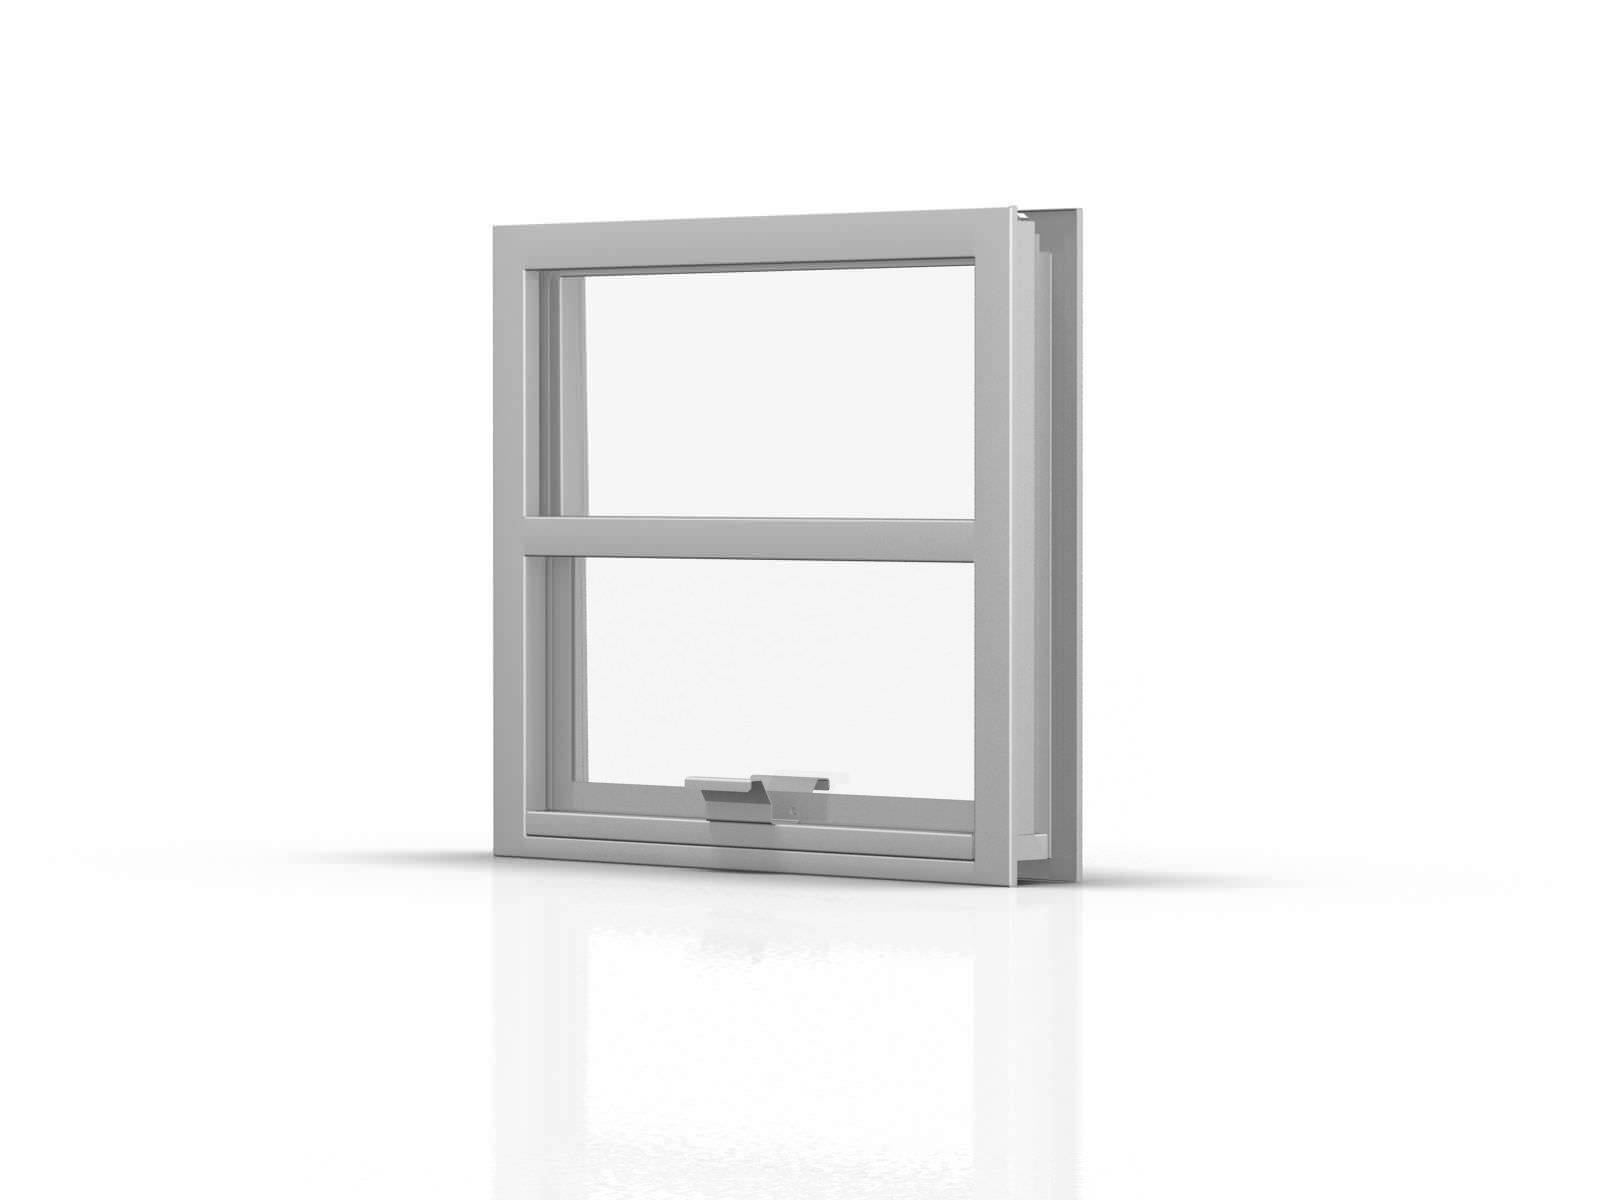 Lifting-sliding double window ALVO Medical